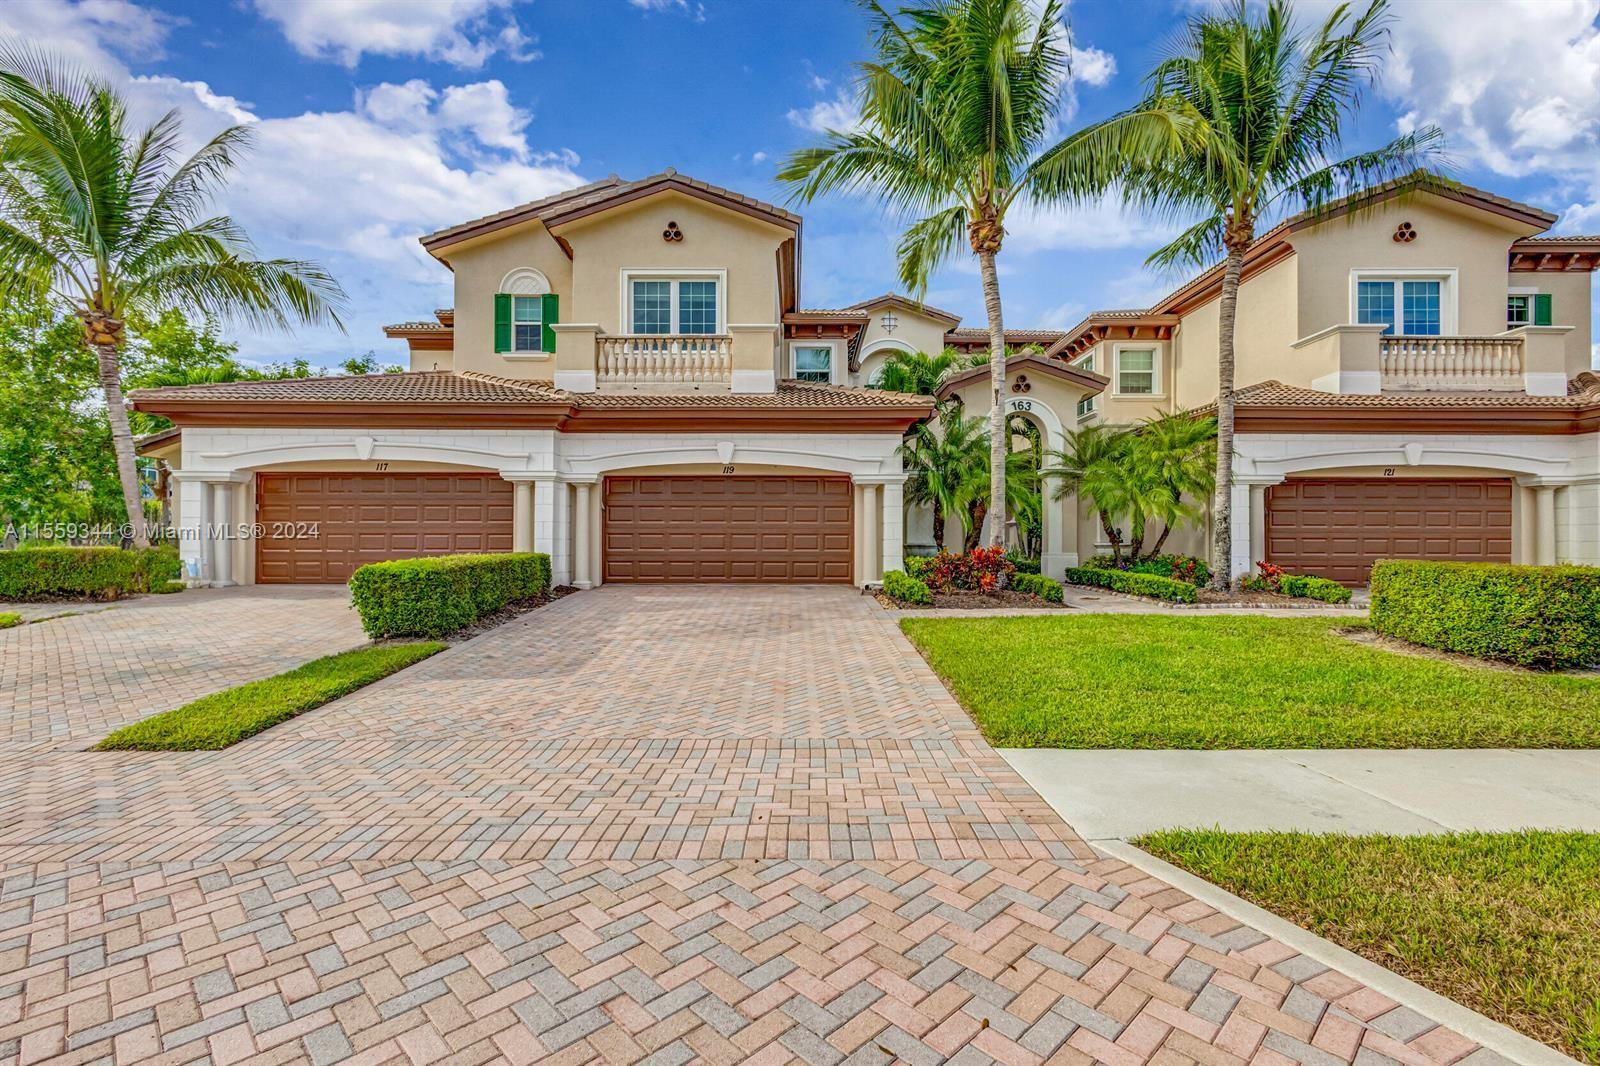 Property for Sale at 163 Tresana Blvd Blvd 119, Jupiter, Palm Beach County, Florida - Bedrooms: 2 
Bathrooms: 2  - $939,000